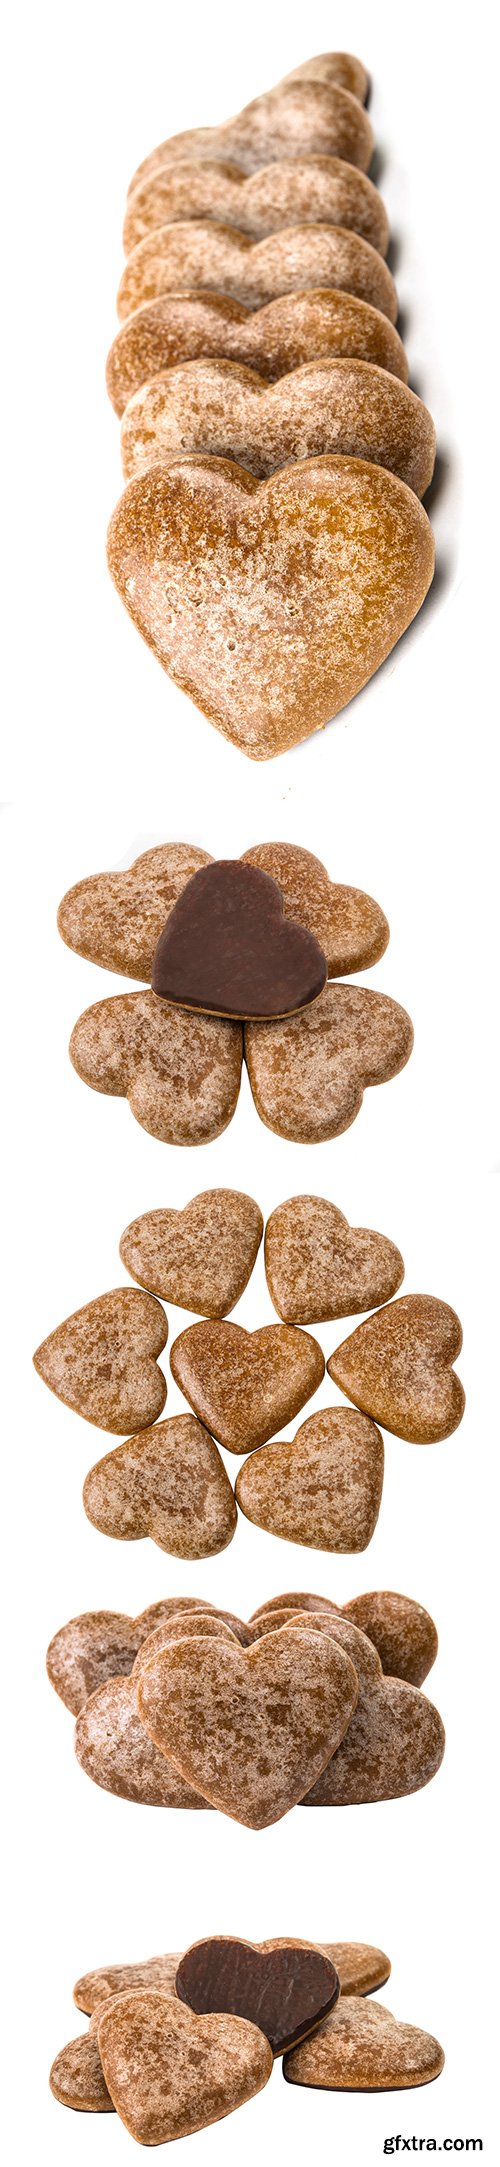 Heart Cookies Isolated - 13xJPGs